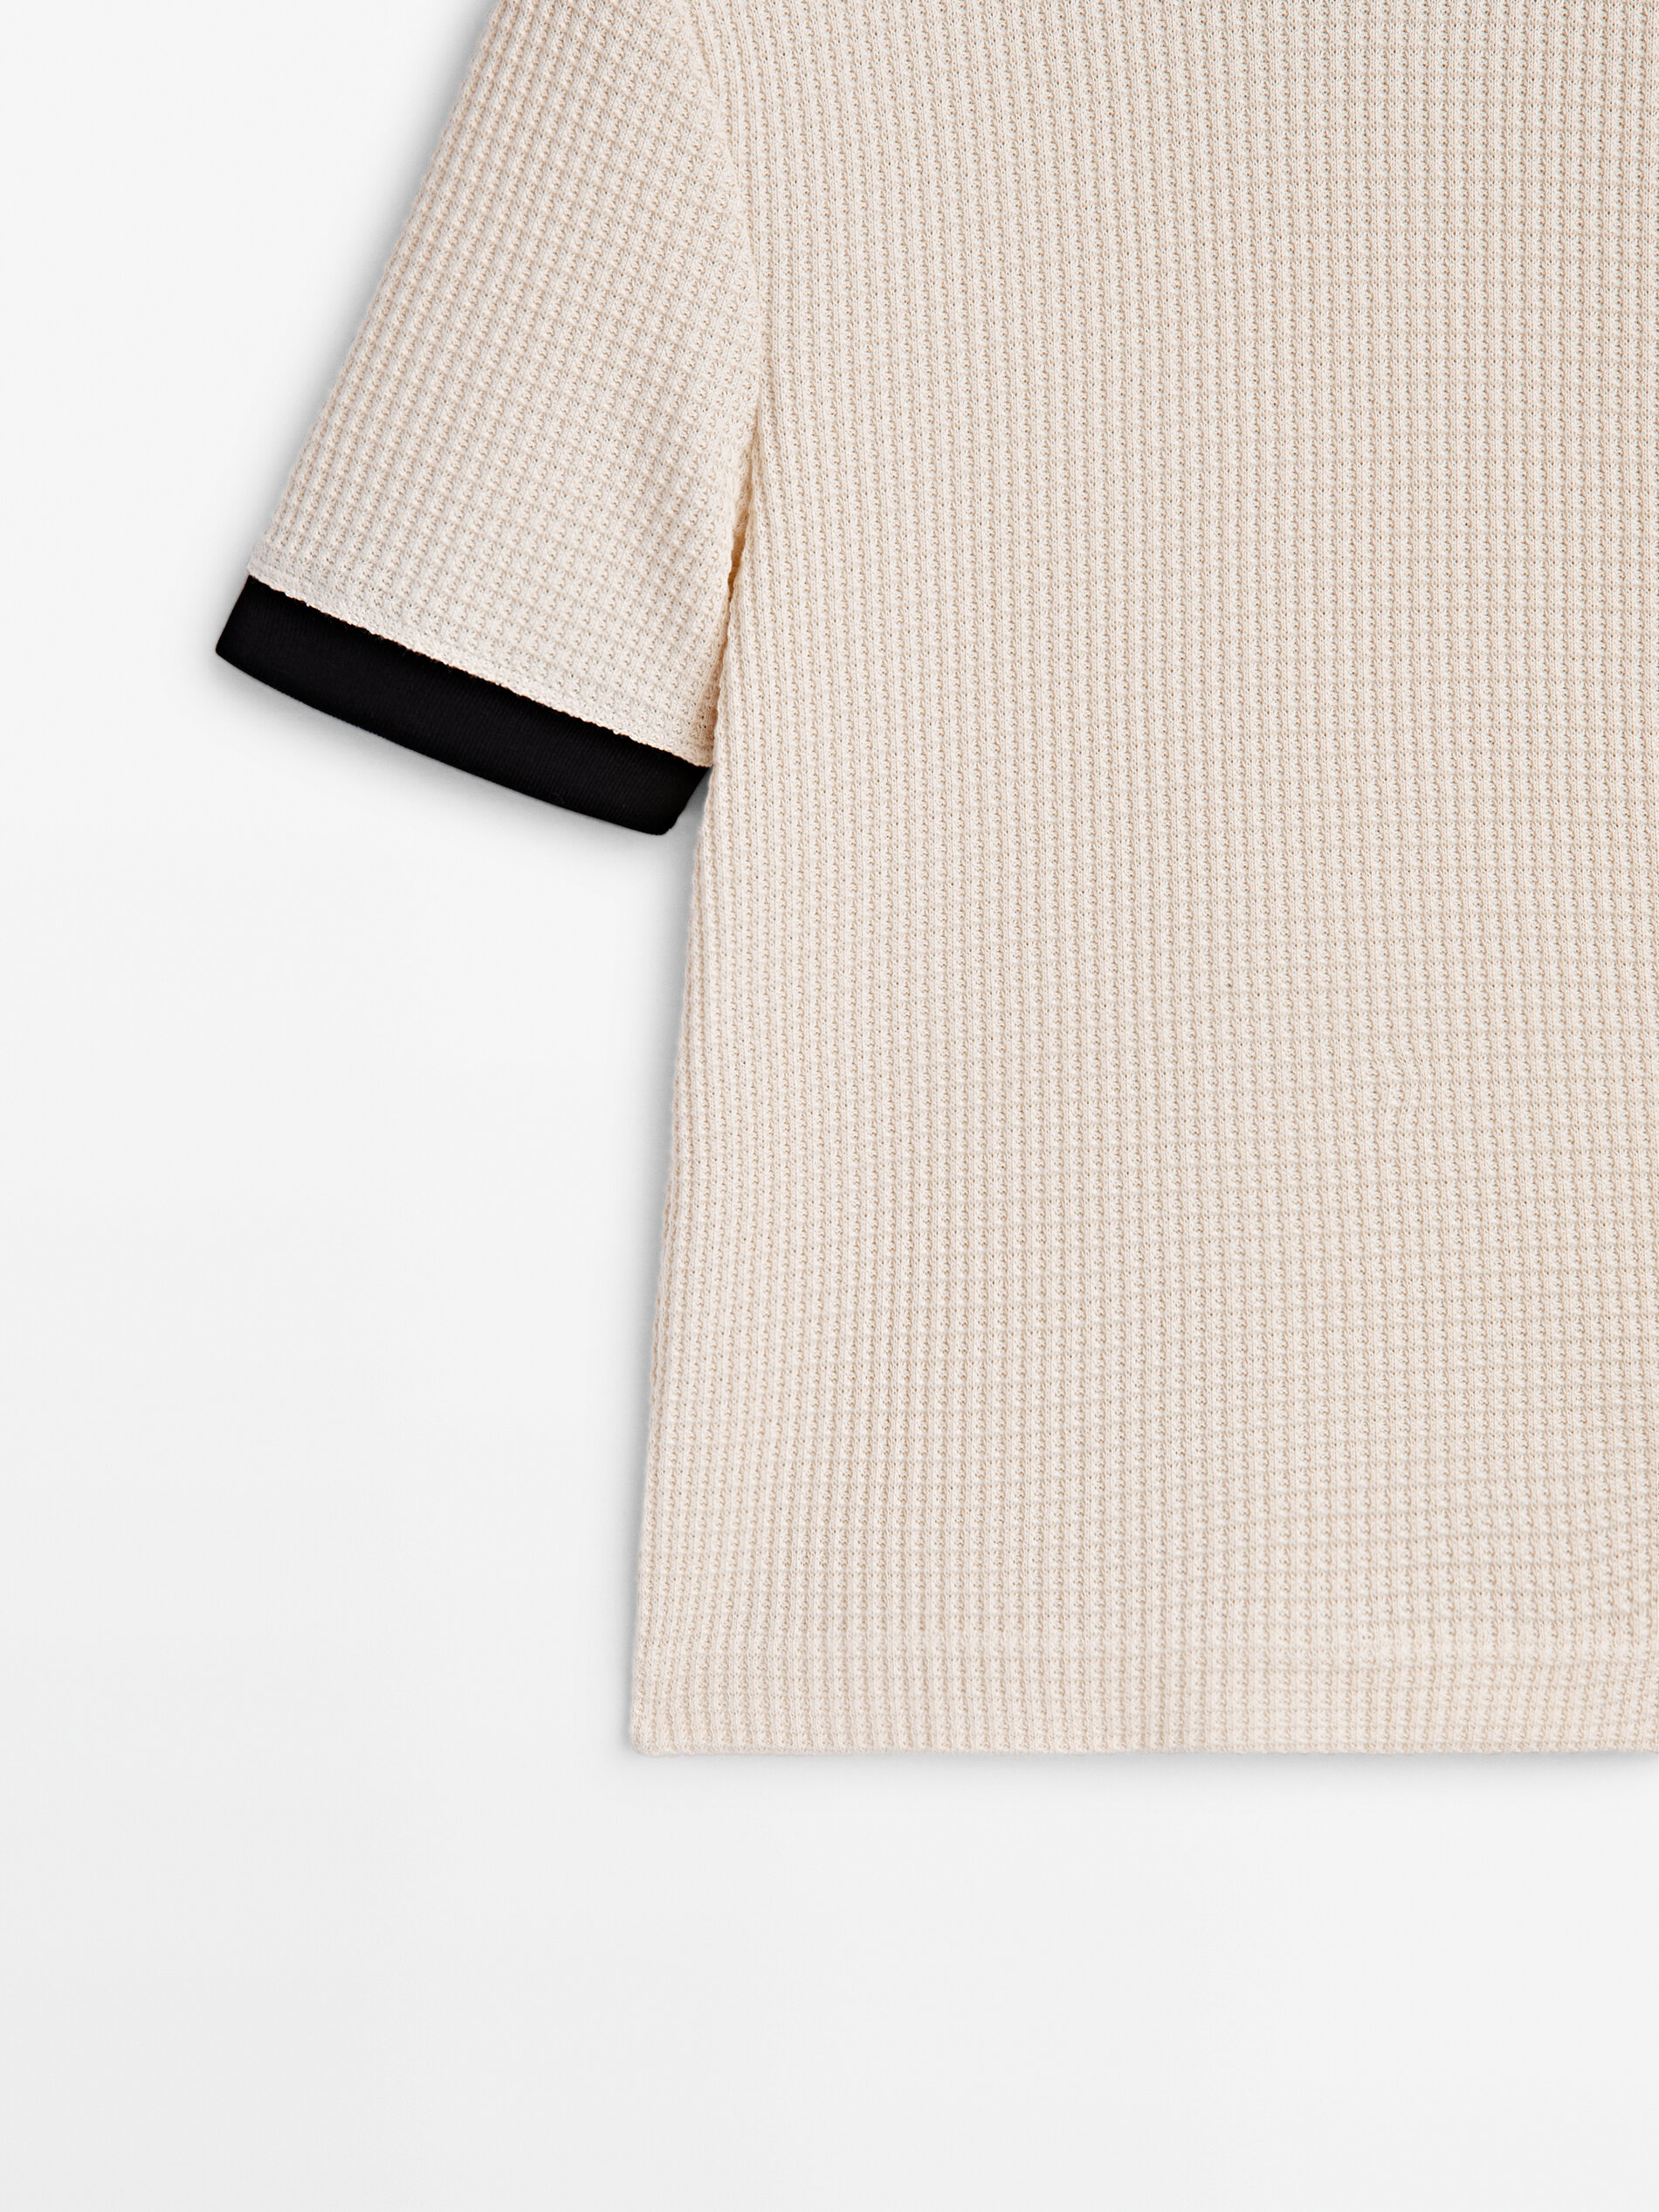 Contrast textured cotton T-shirt